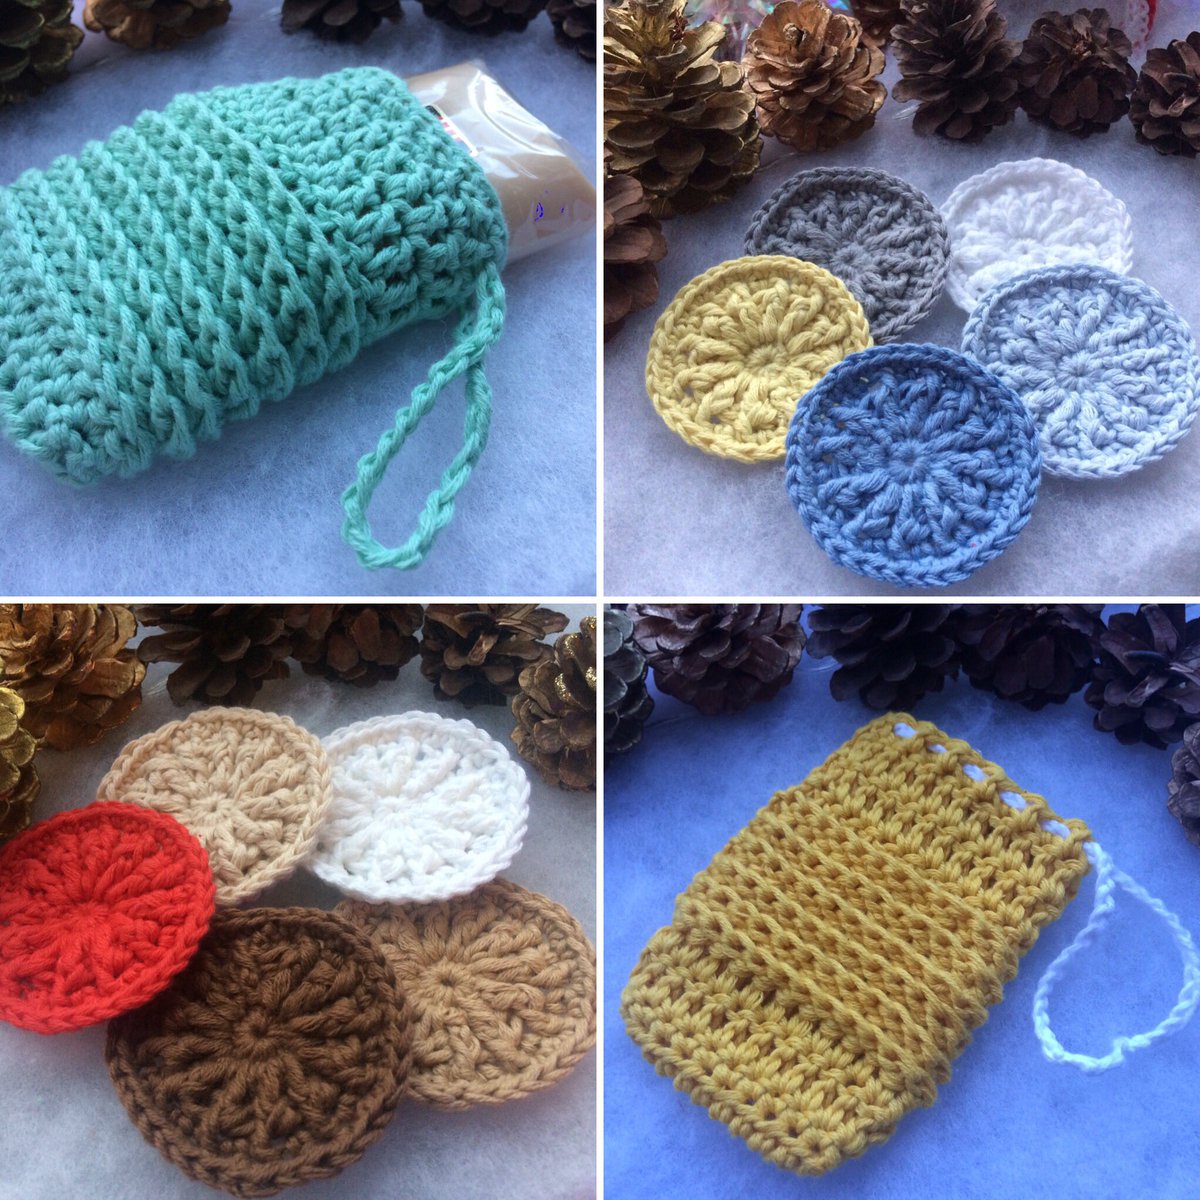 Doing my little bit to reduce waste #ecocrochet 🥰 #crochetmakeupremoverpads #soapsaverbags #reusable #crochet #craftingforwellbeing